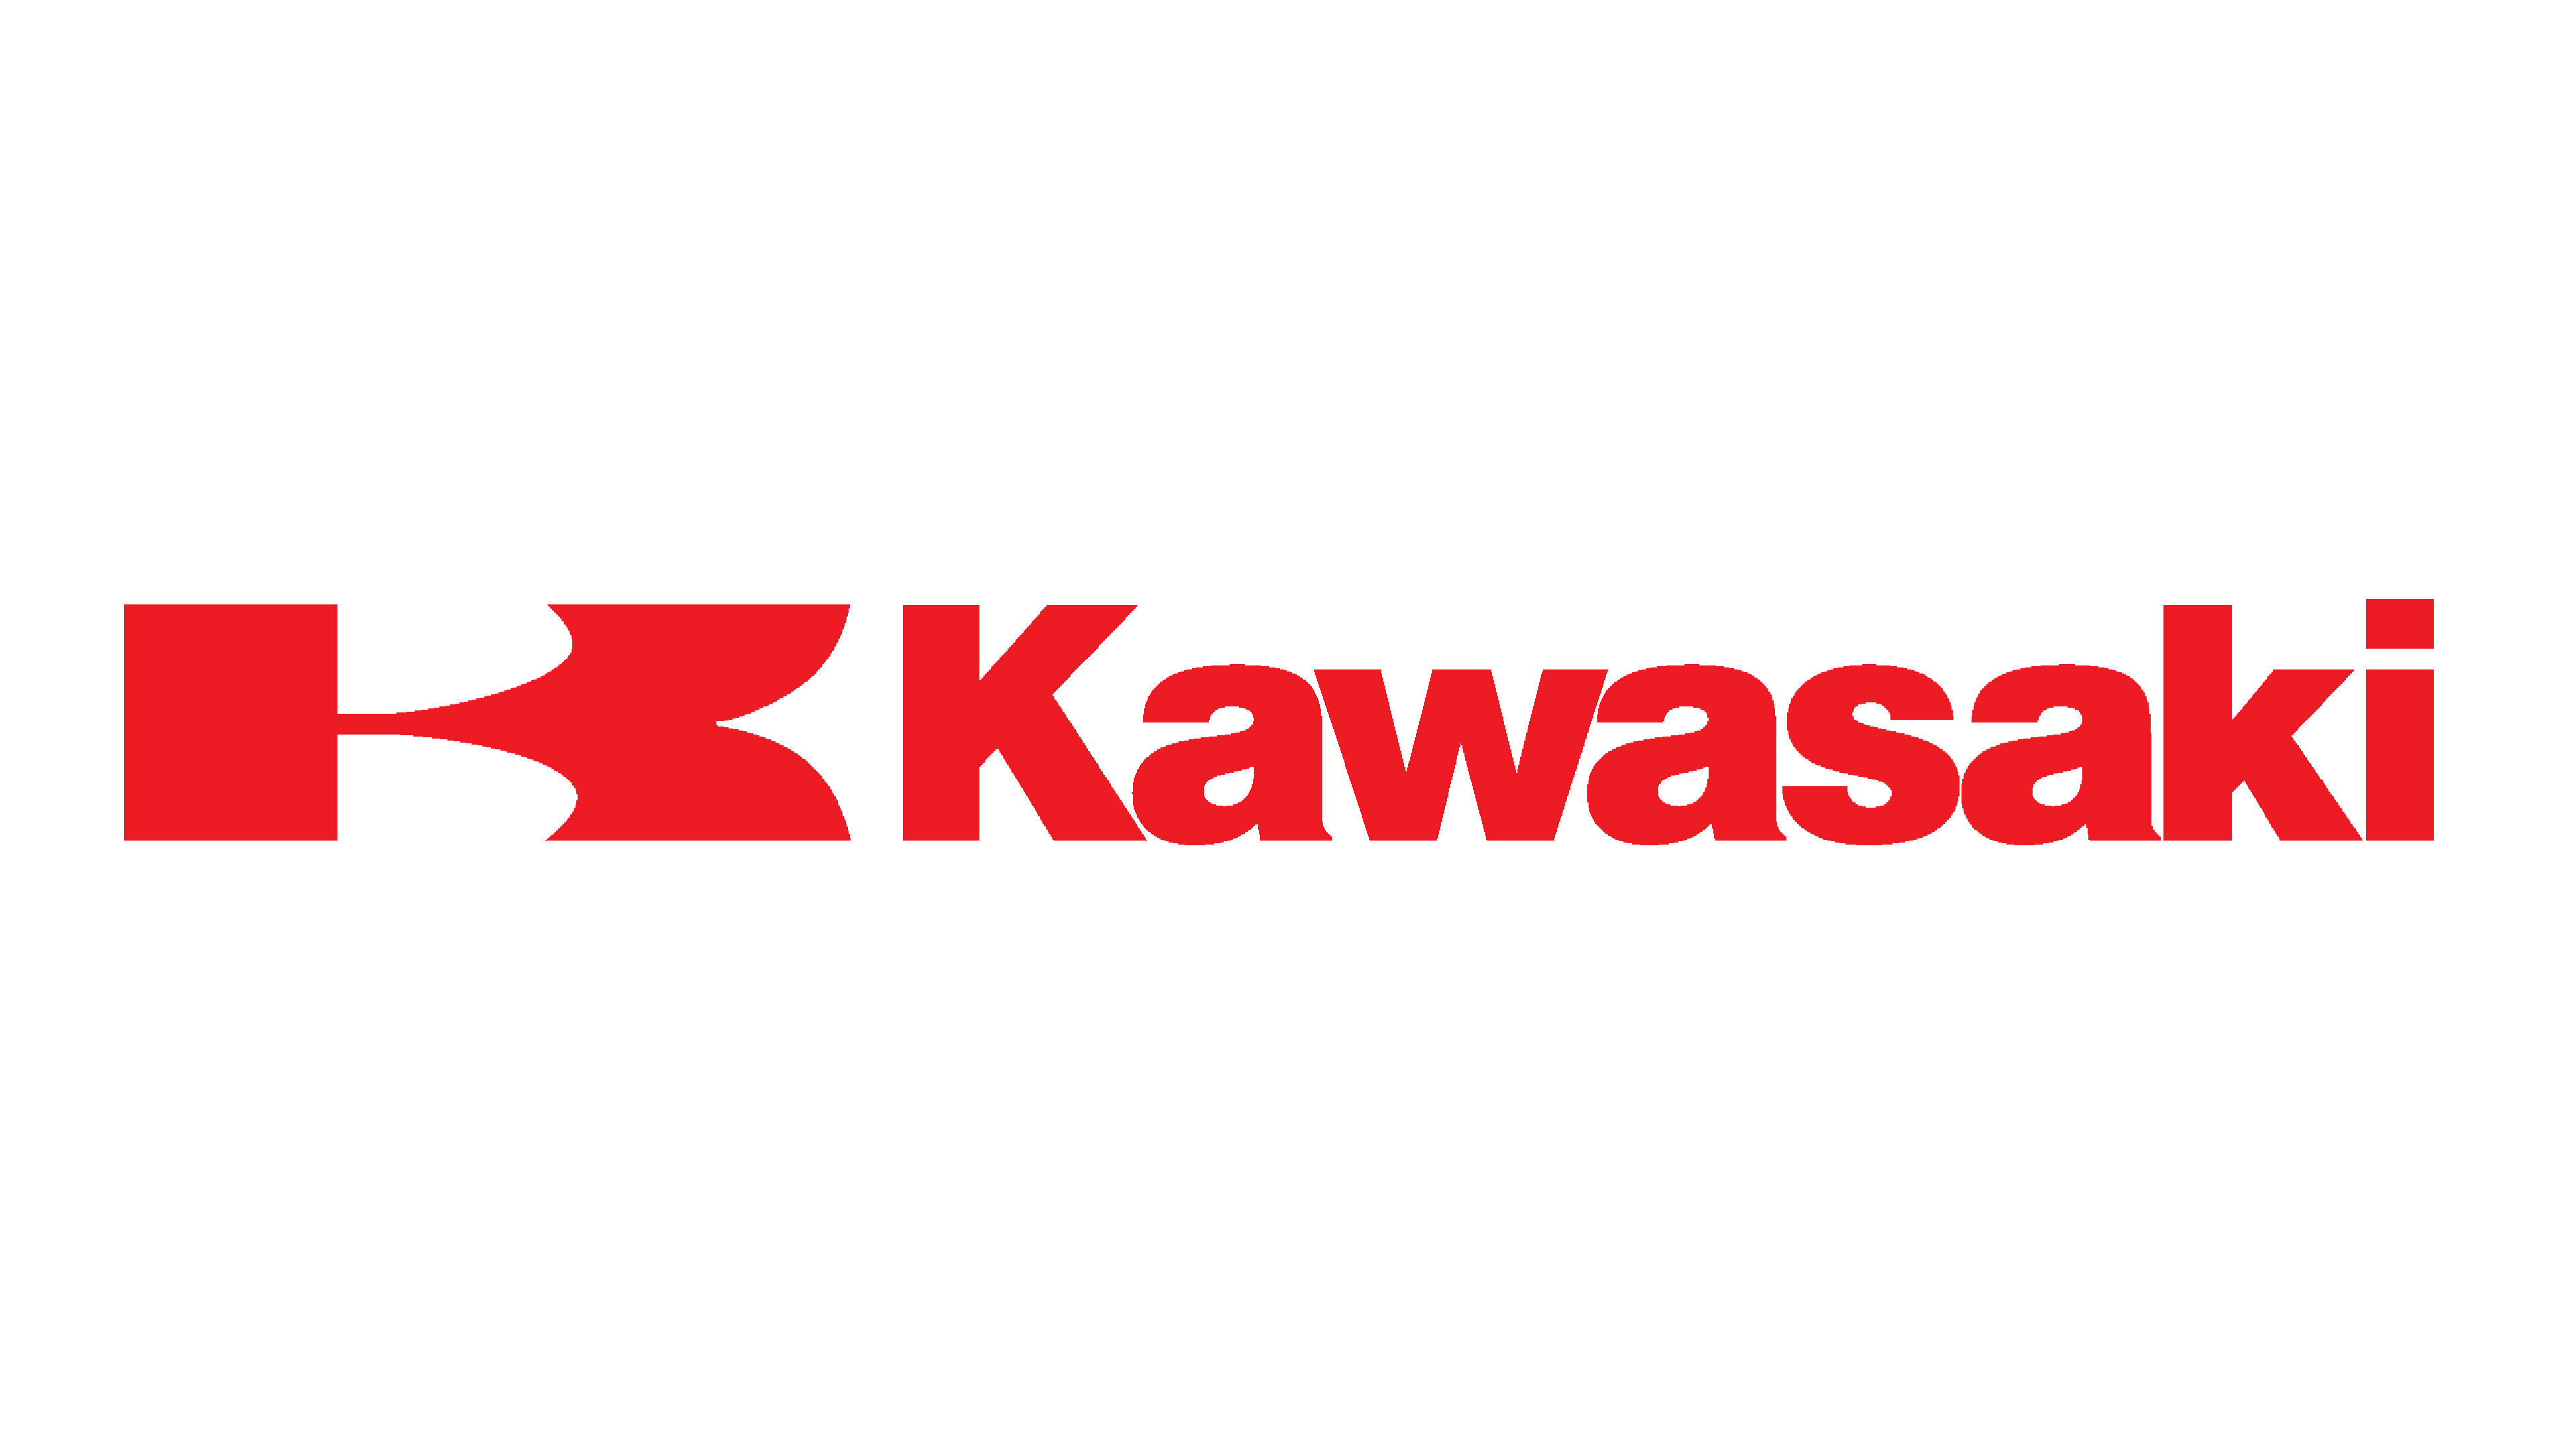 Kawasaki Aerospace Company logo download in SVG vector format or in PNG format 3840x2160